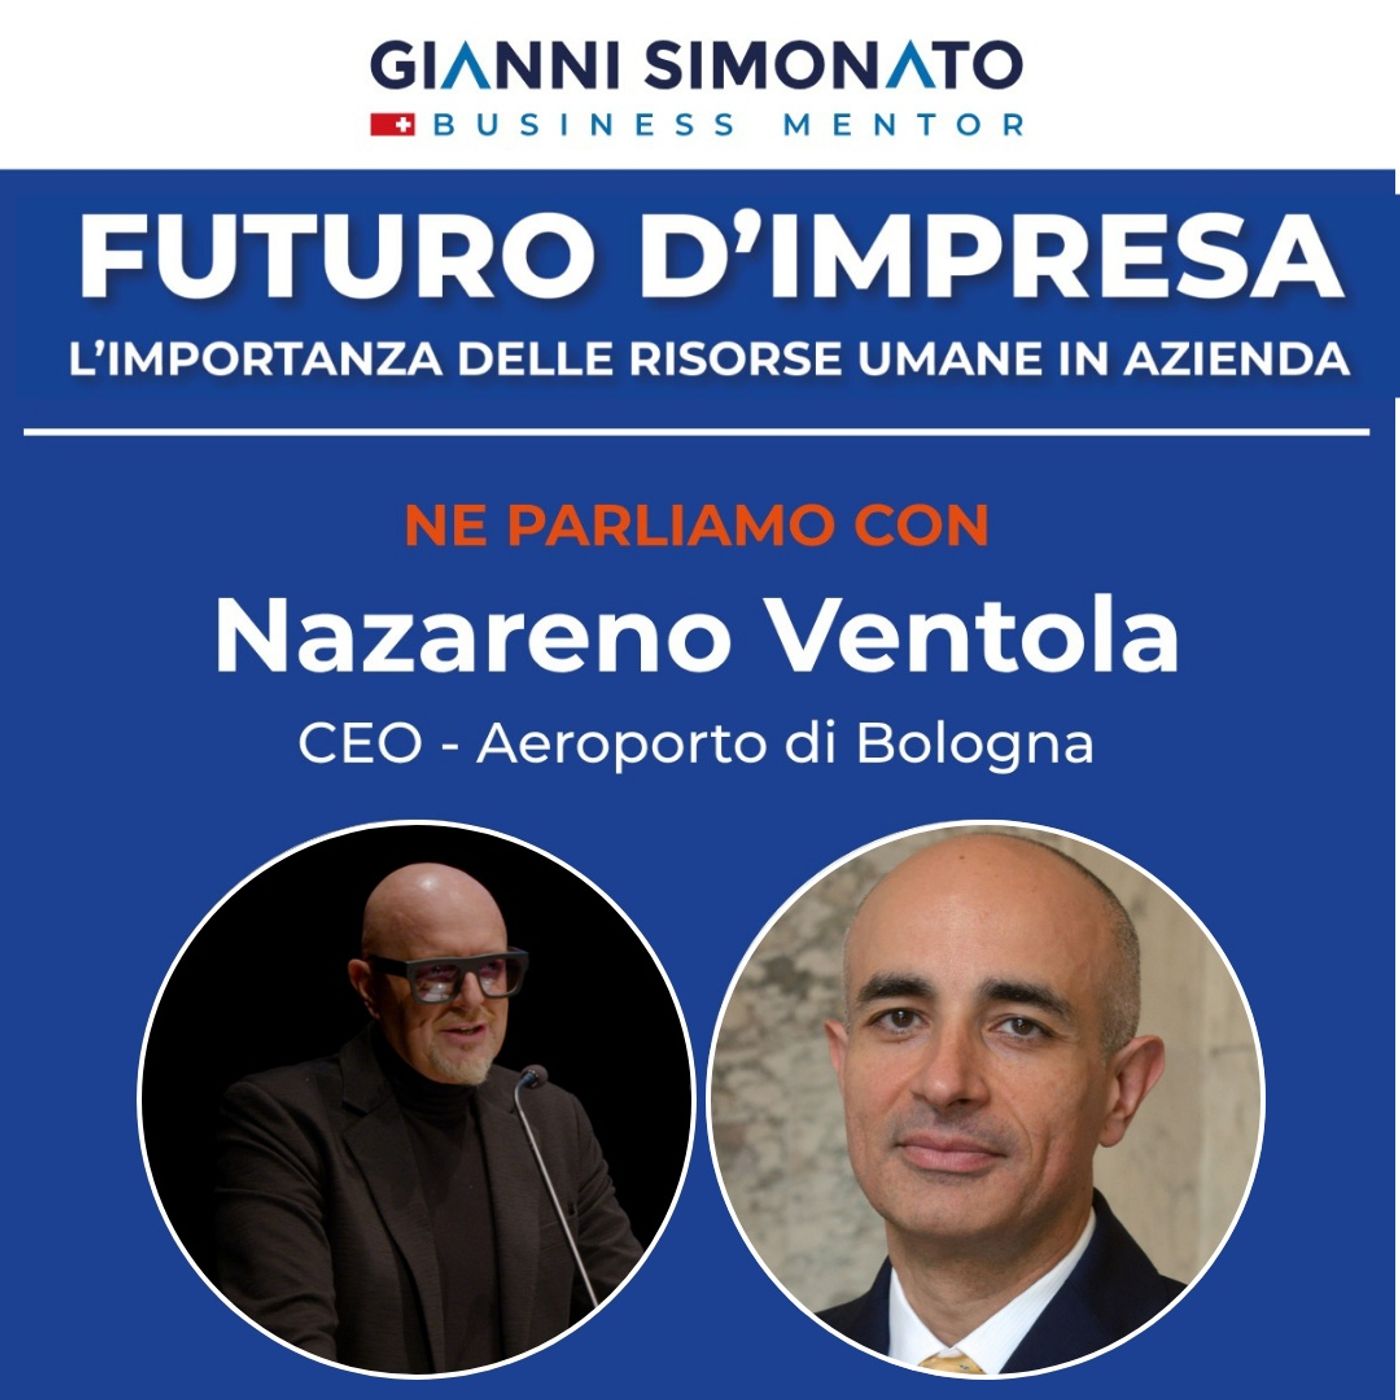 Futuro d'Impresa ne parliamo con: Nazareno Ventola CEO - Aeroporto di Bologna e Gianni Simonato CEO Mentor